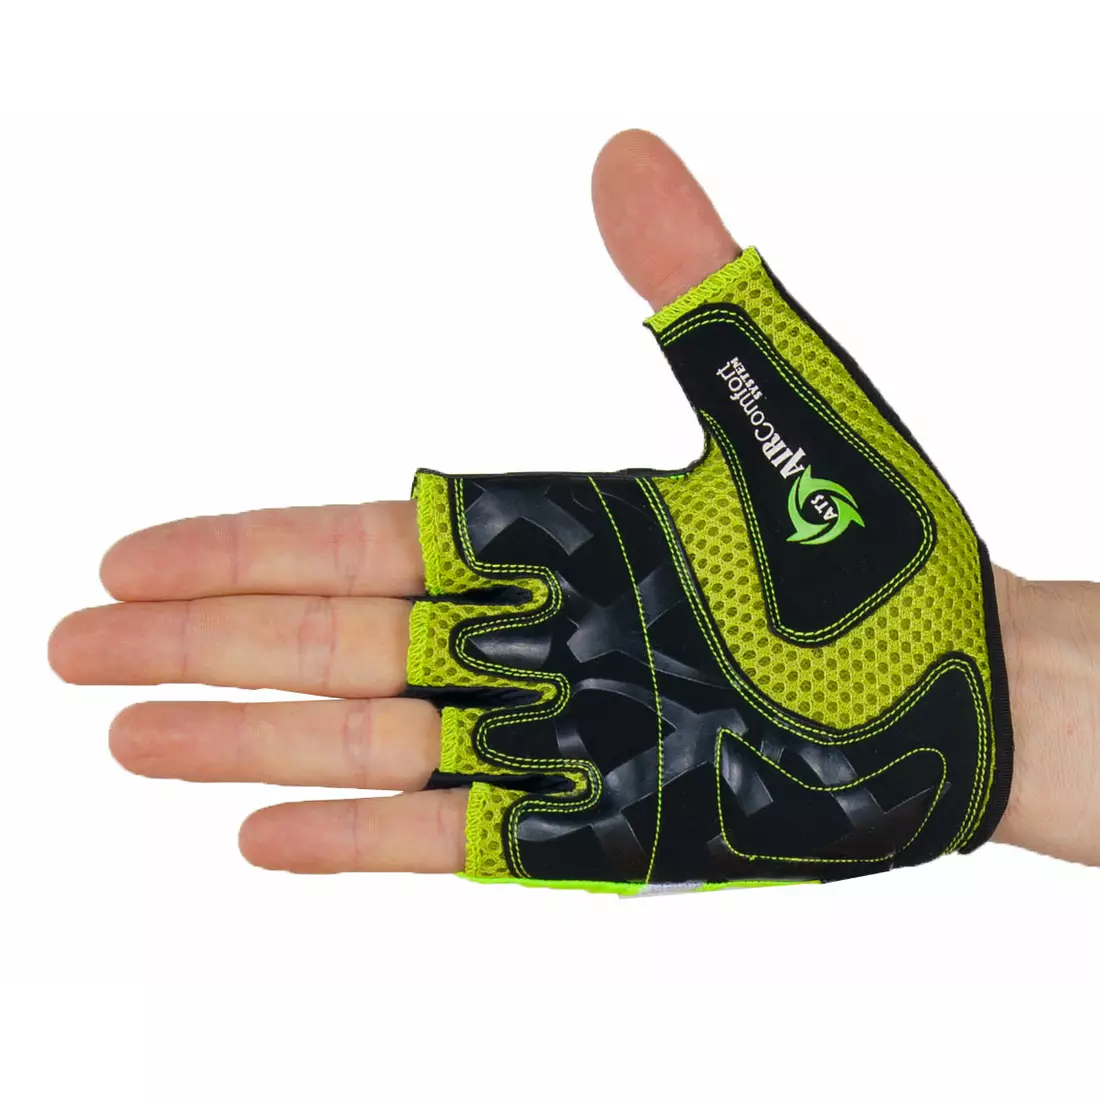 DEKO cycling gloves Gel fluor-yellow DKSG-1014